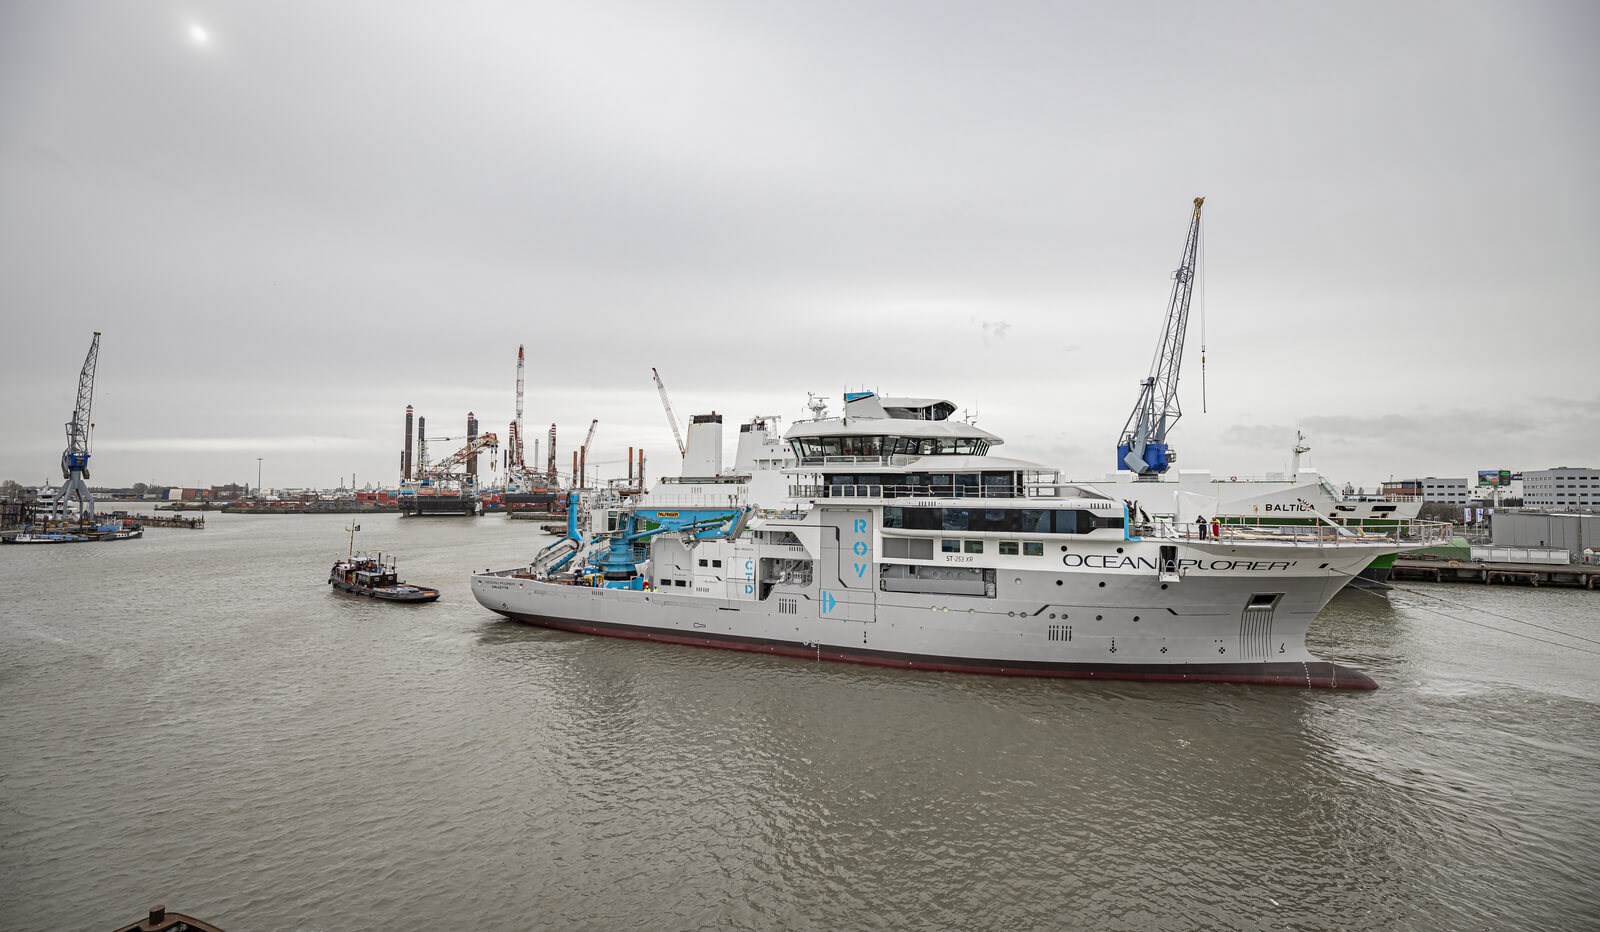 Damen Shiprepair & Conversion undertaking OceanXplorer Rebuild (Video)